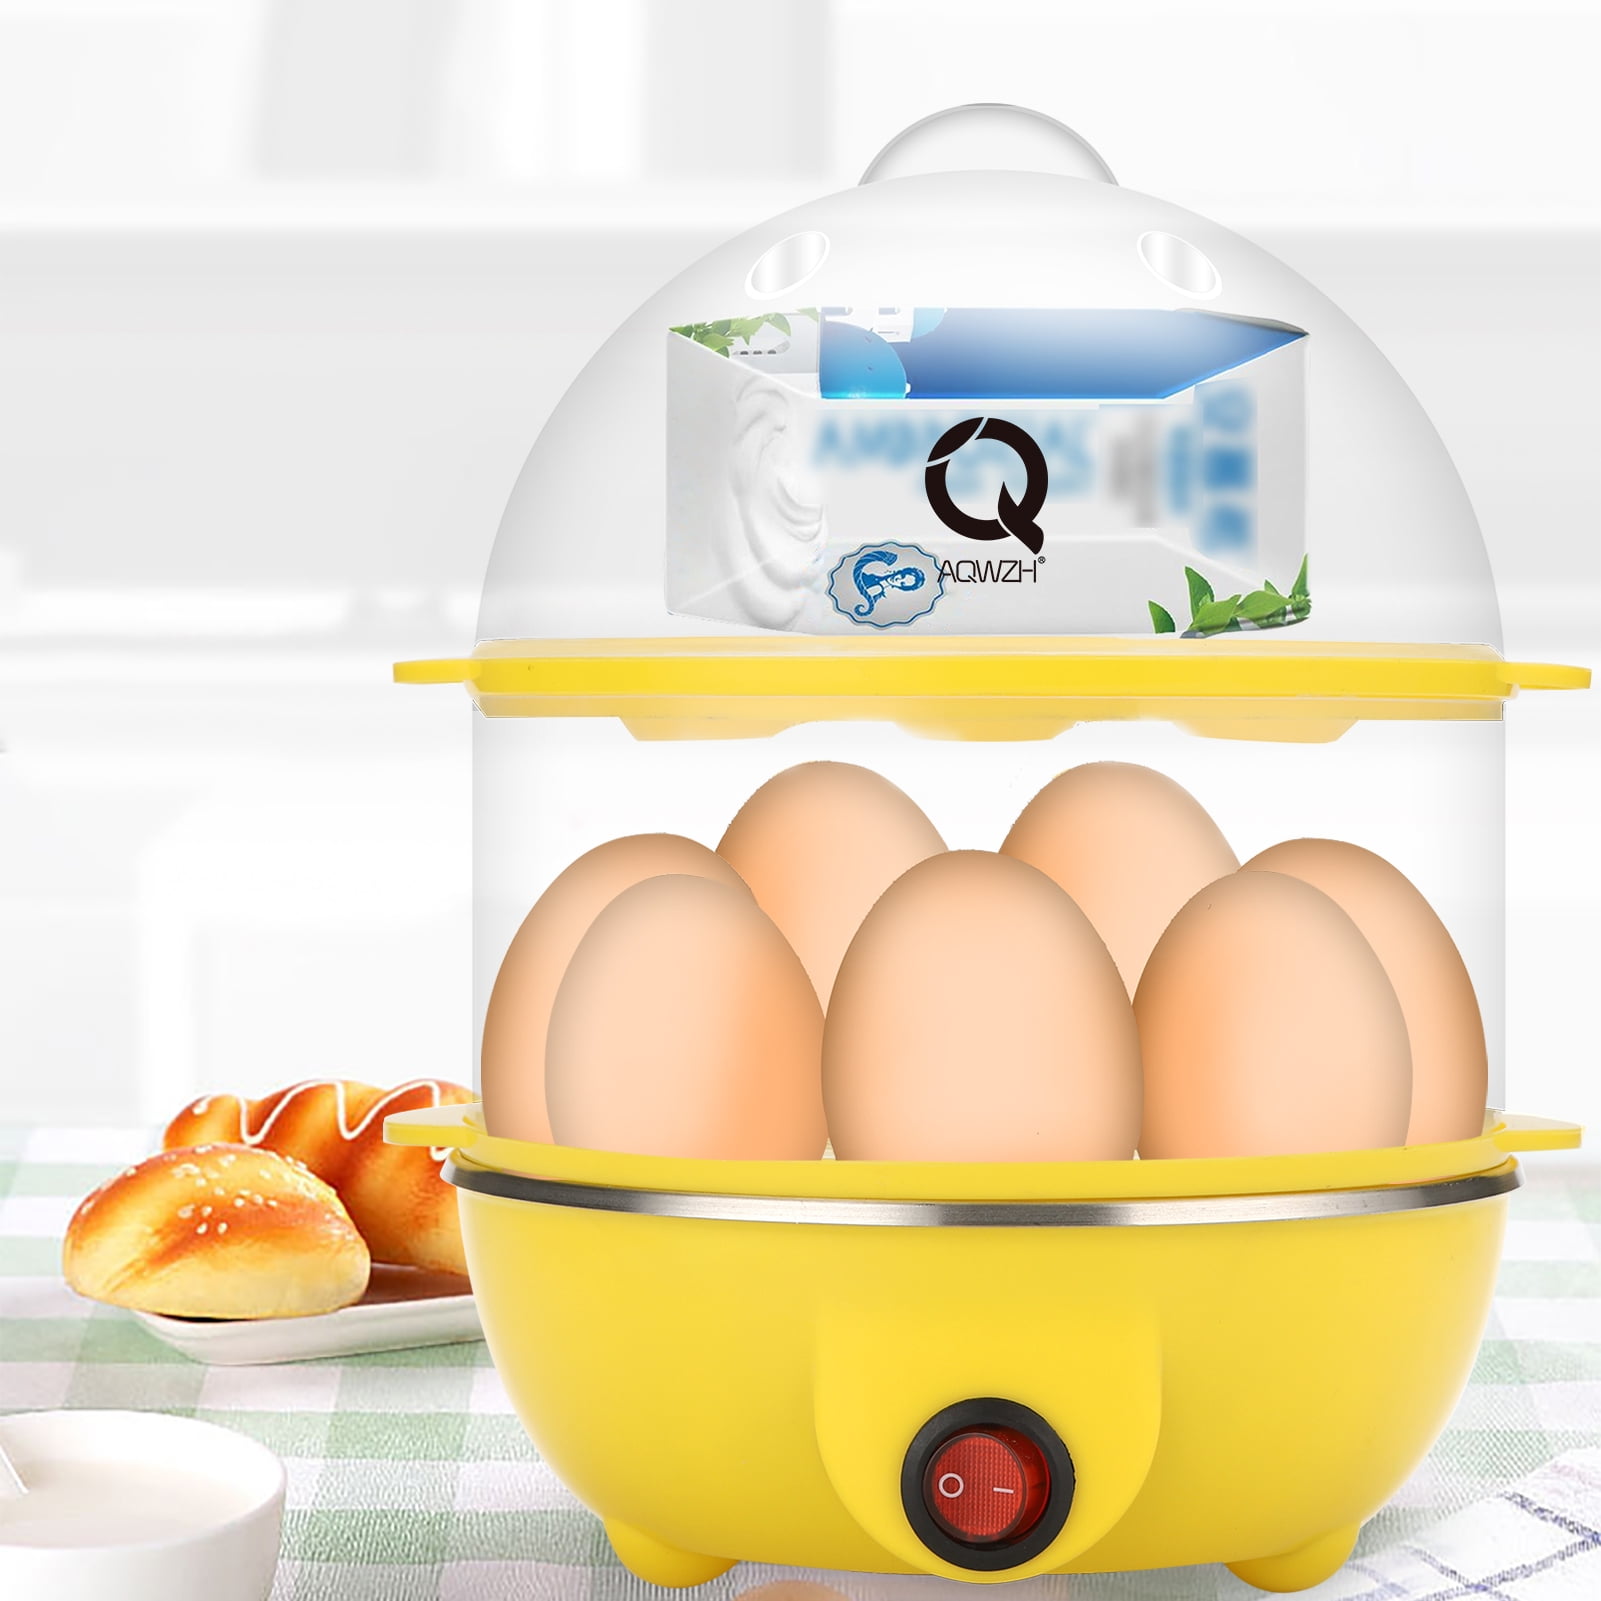 VOBAGA Electric Egg Cooker, Rapid Egg Boiler with Auto Shut Off for Soft,  Medium, Hard Boiled, Poached, Steamed Eggs, Vegetables and Dumplings